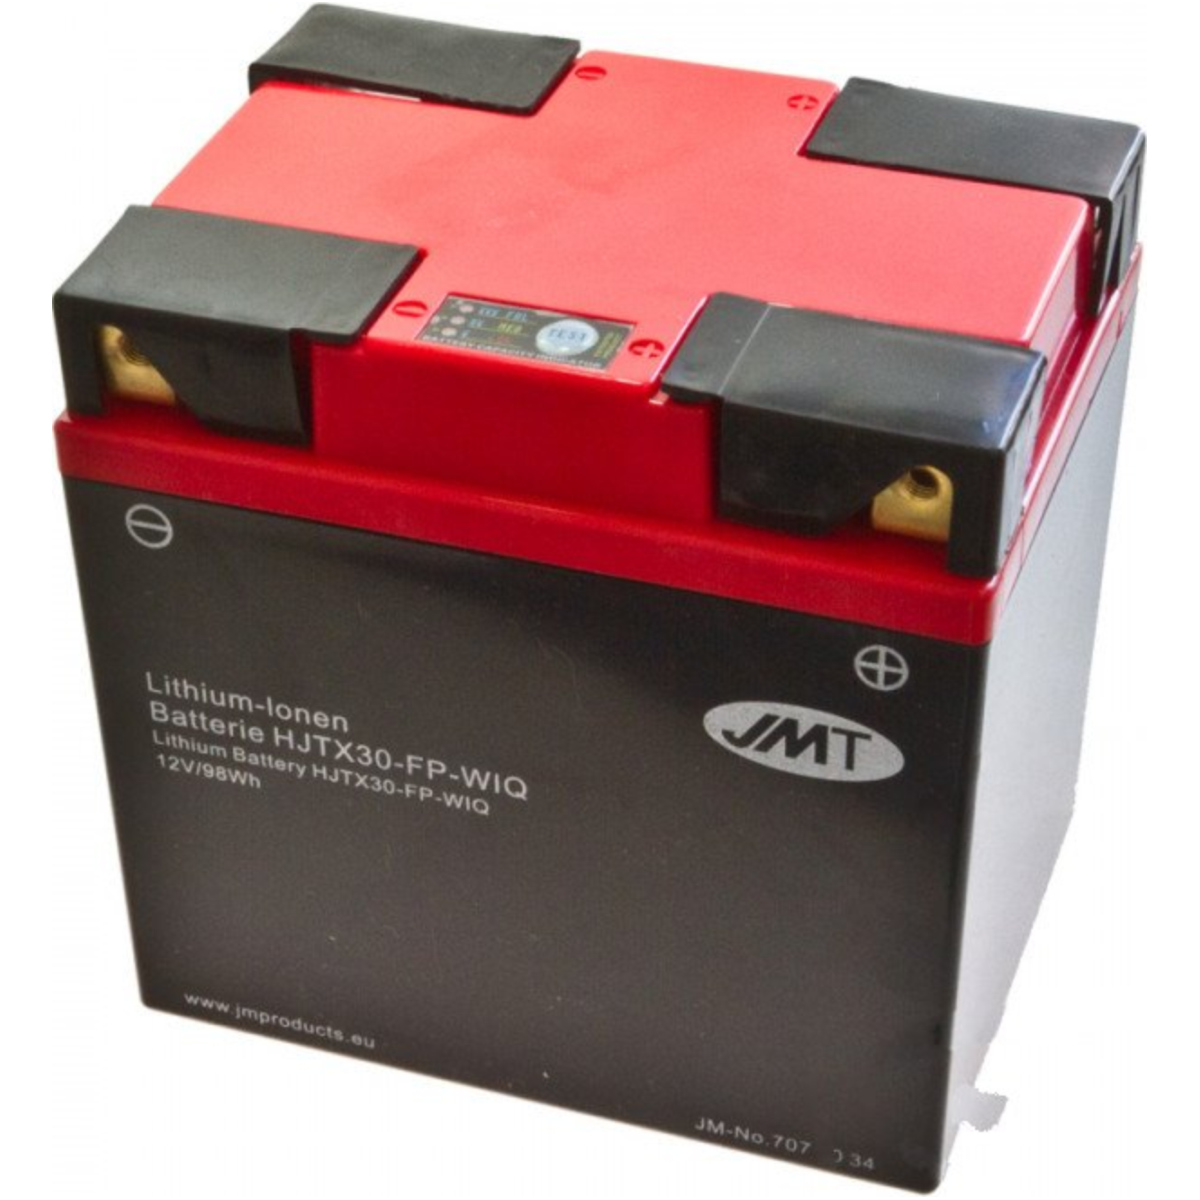 Jmt hjtx30-fp-wiq motorradbatterie hjtx30-fp von JMT